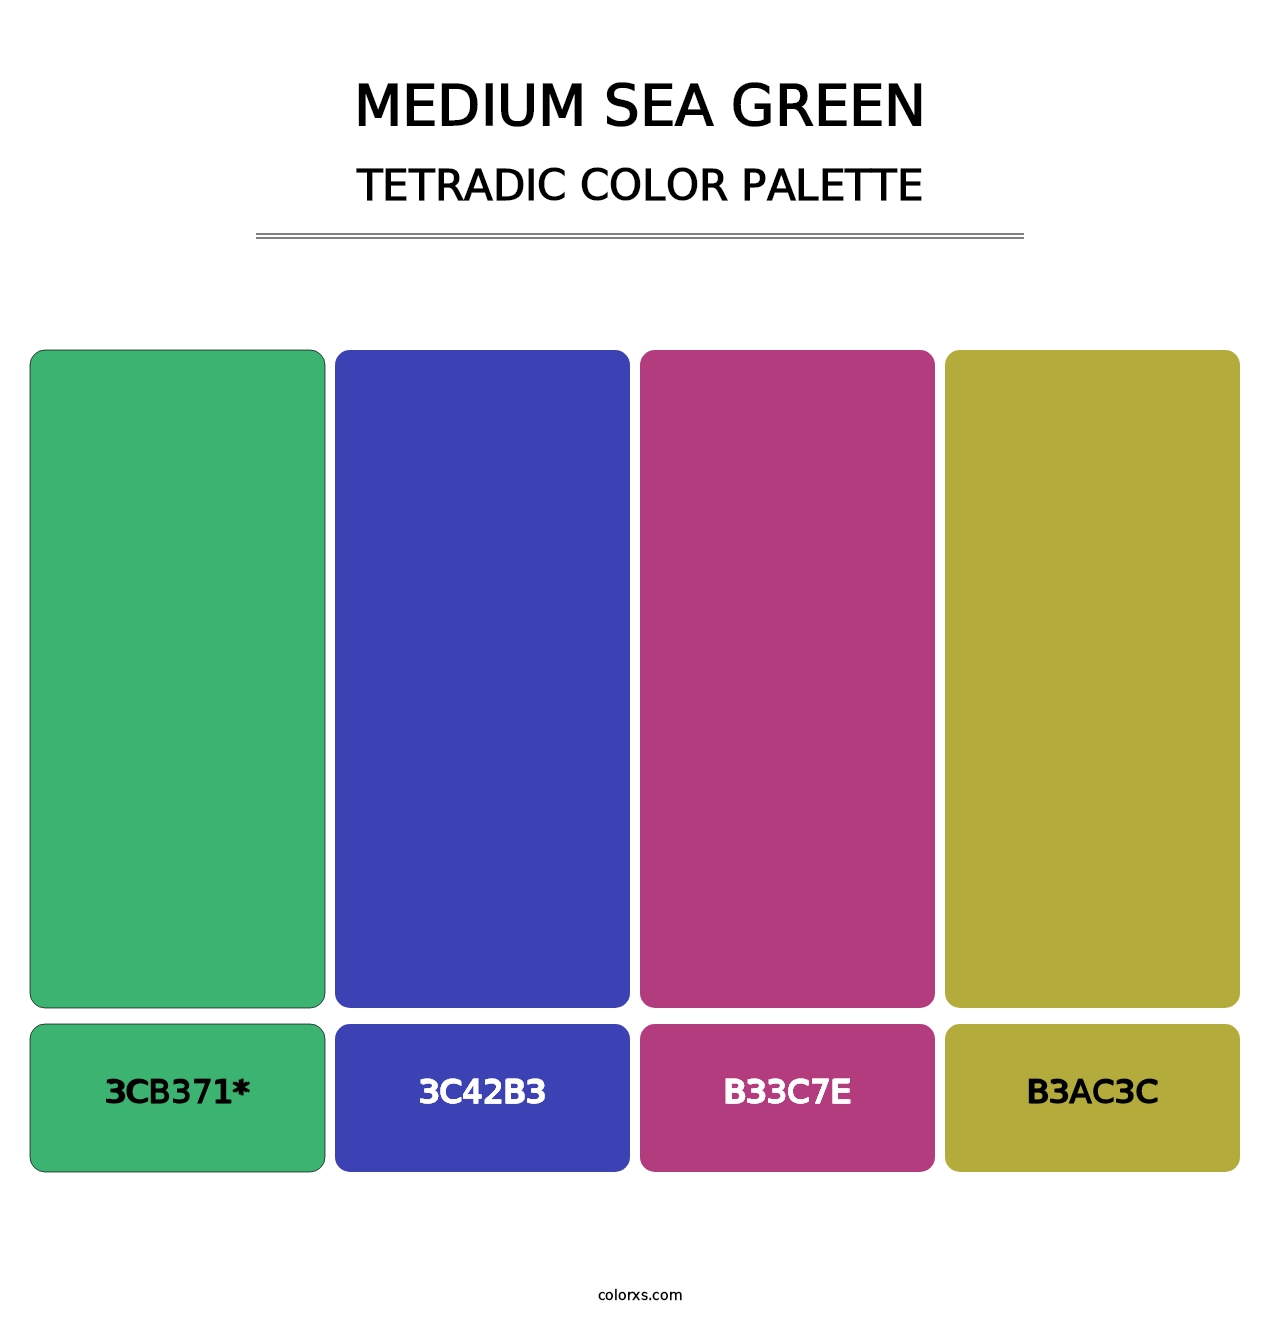 Medium Sea Green - Tetradic Color Palette